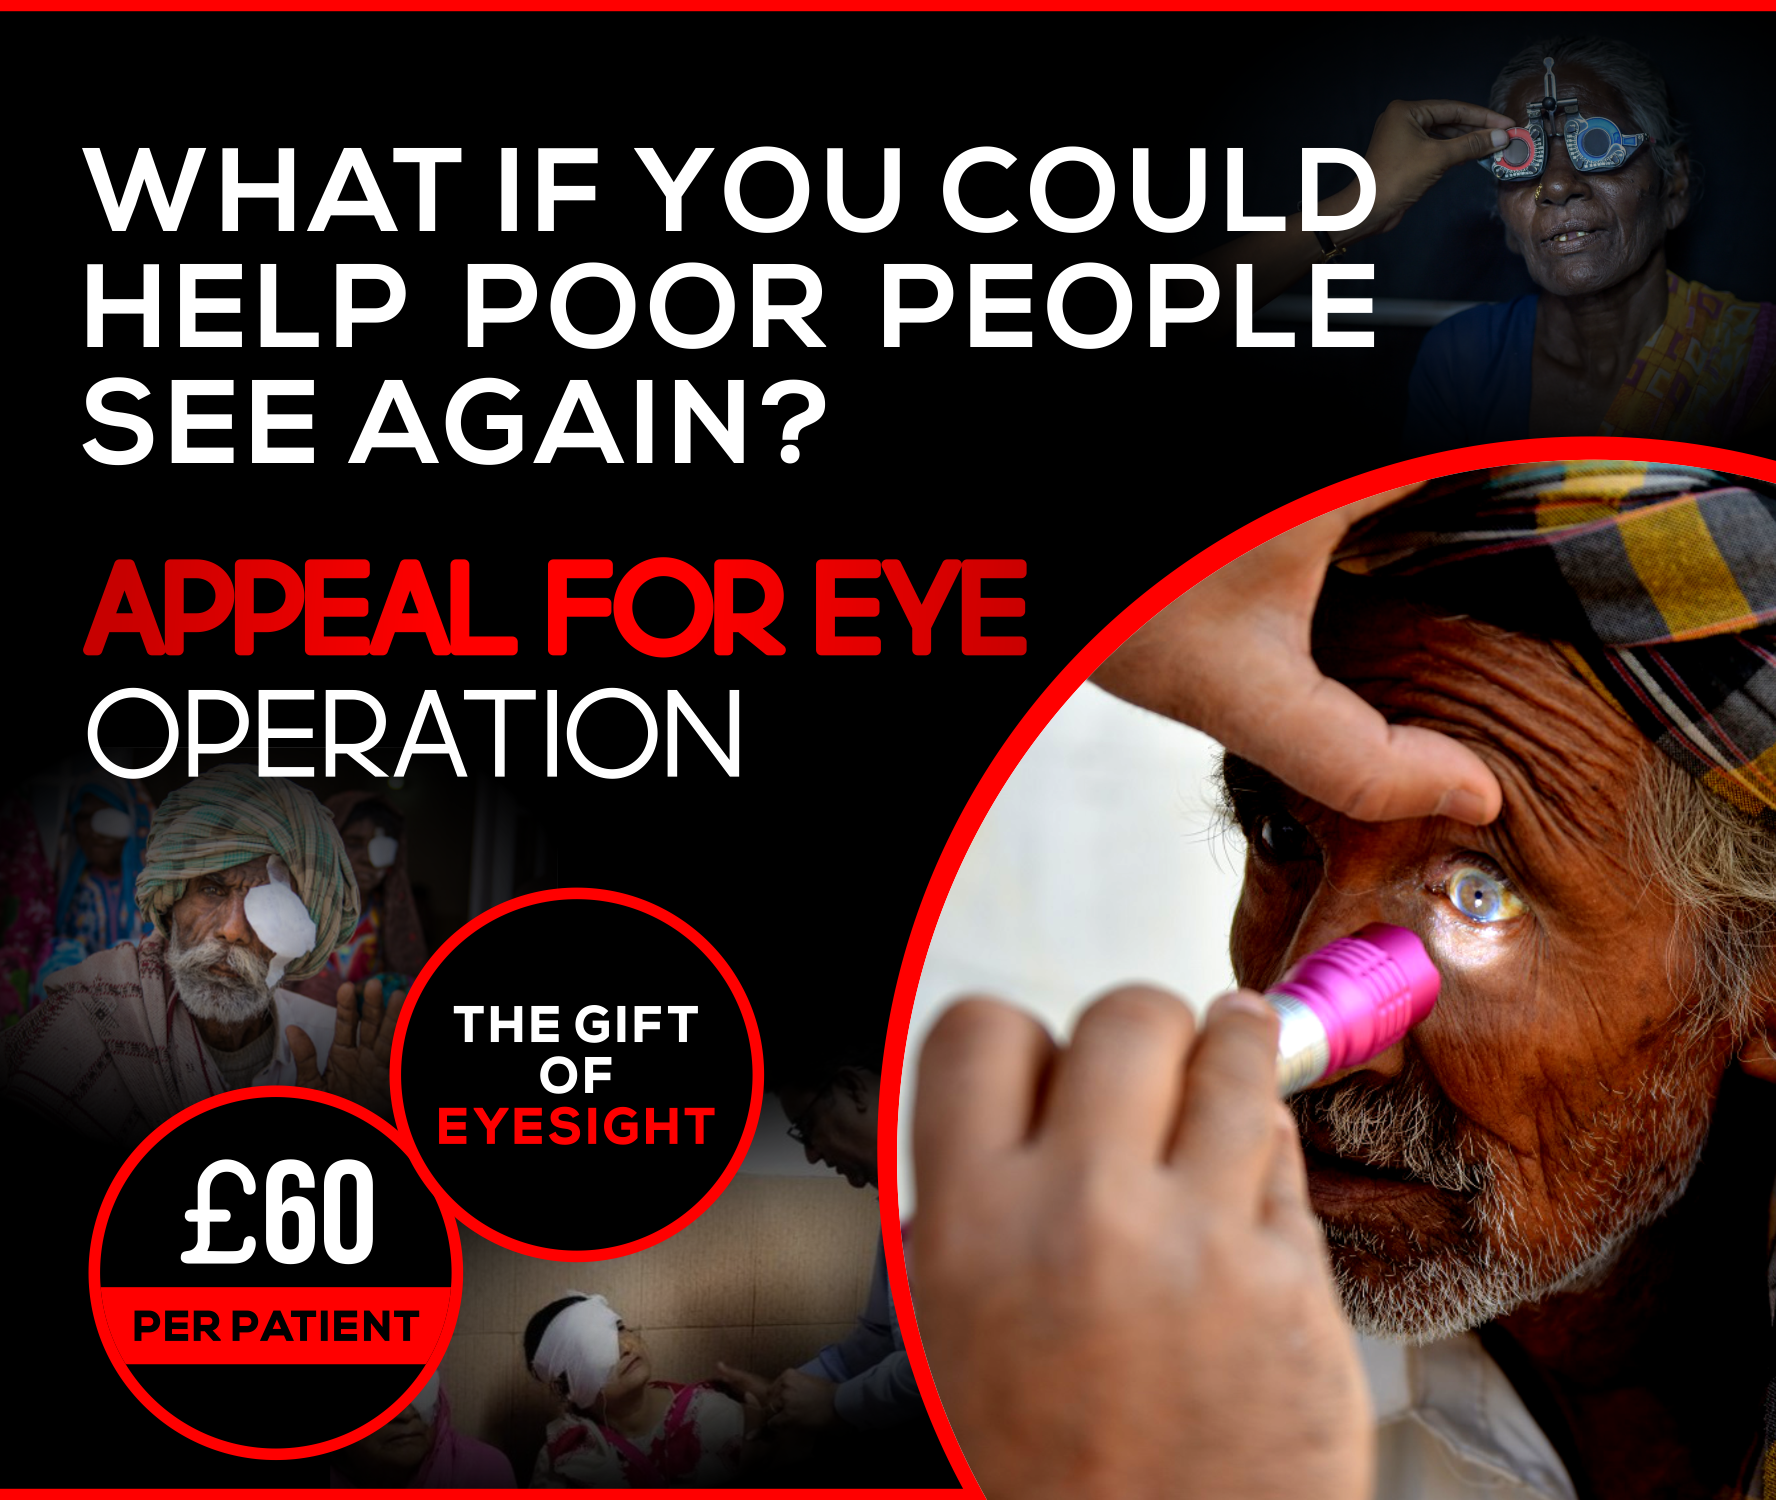 The gift of eyesight: £60